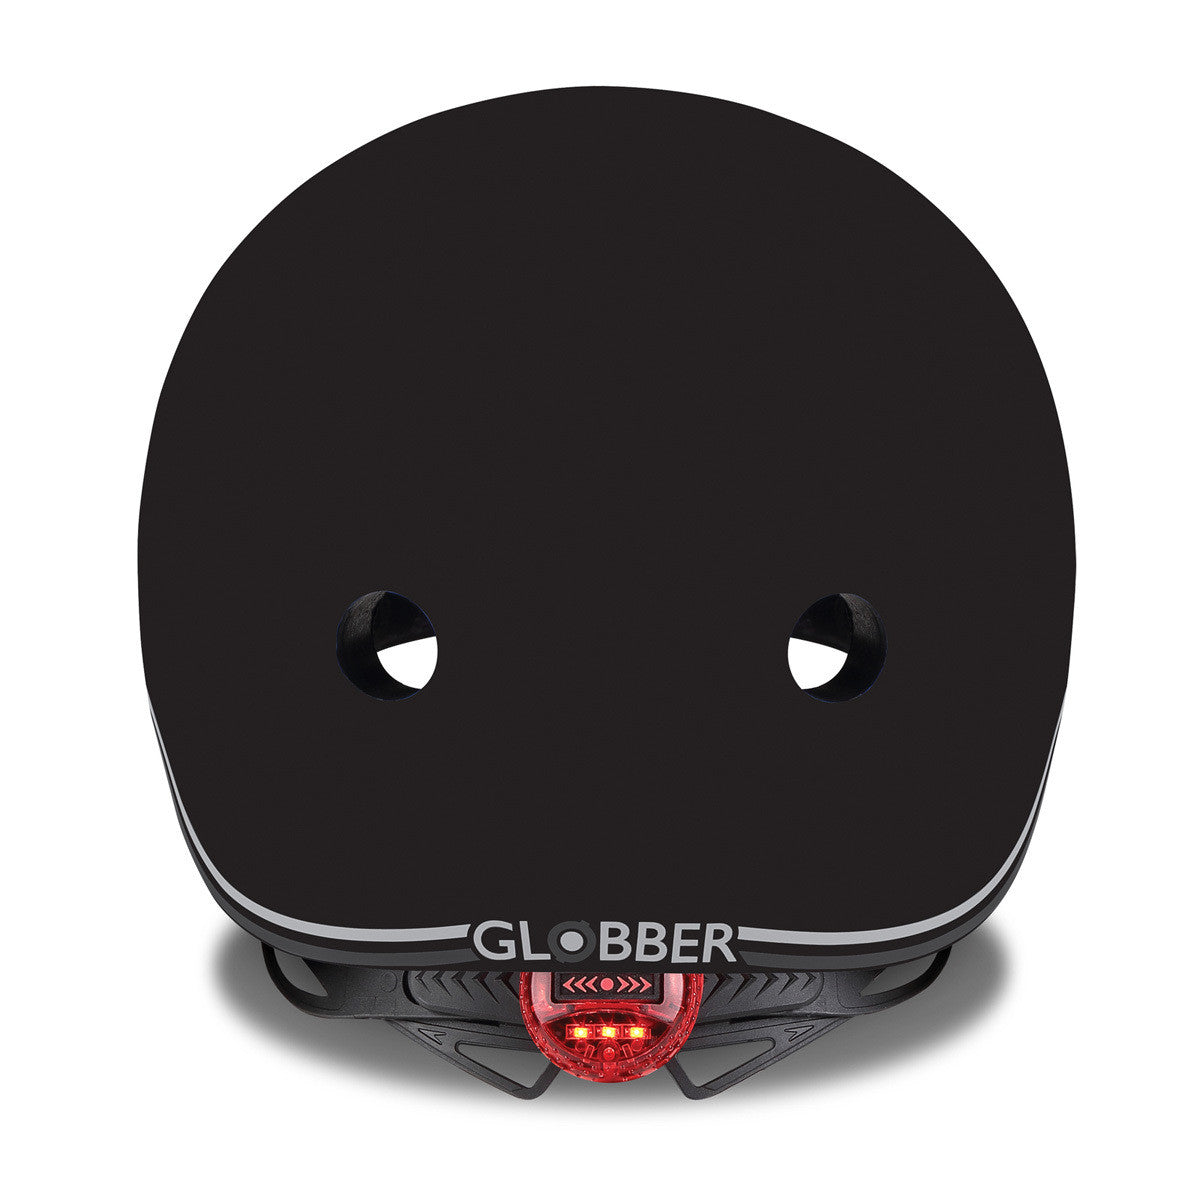 Globber Helmet - Black - Extra Small (46-51cm)